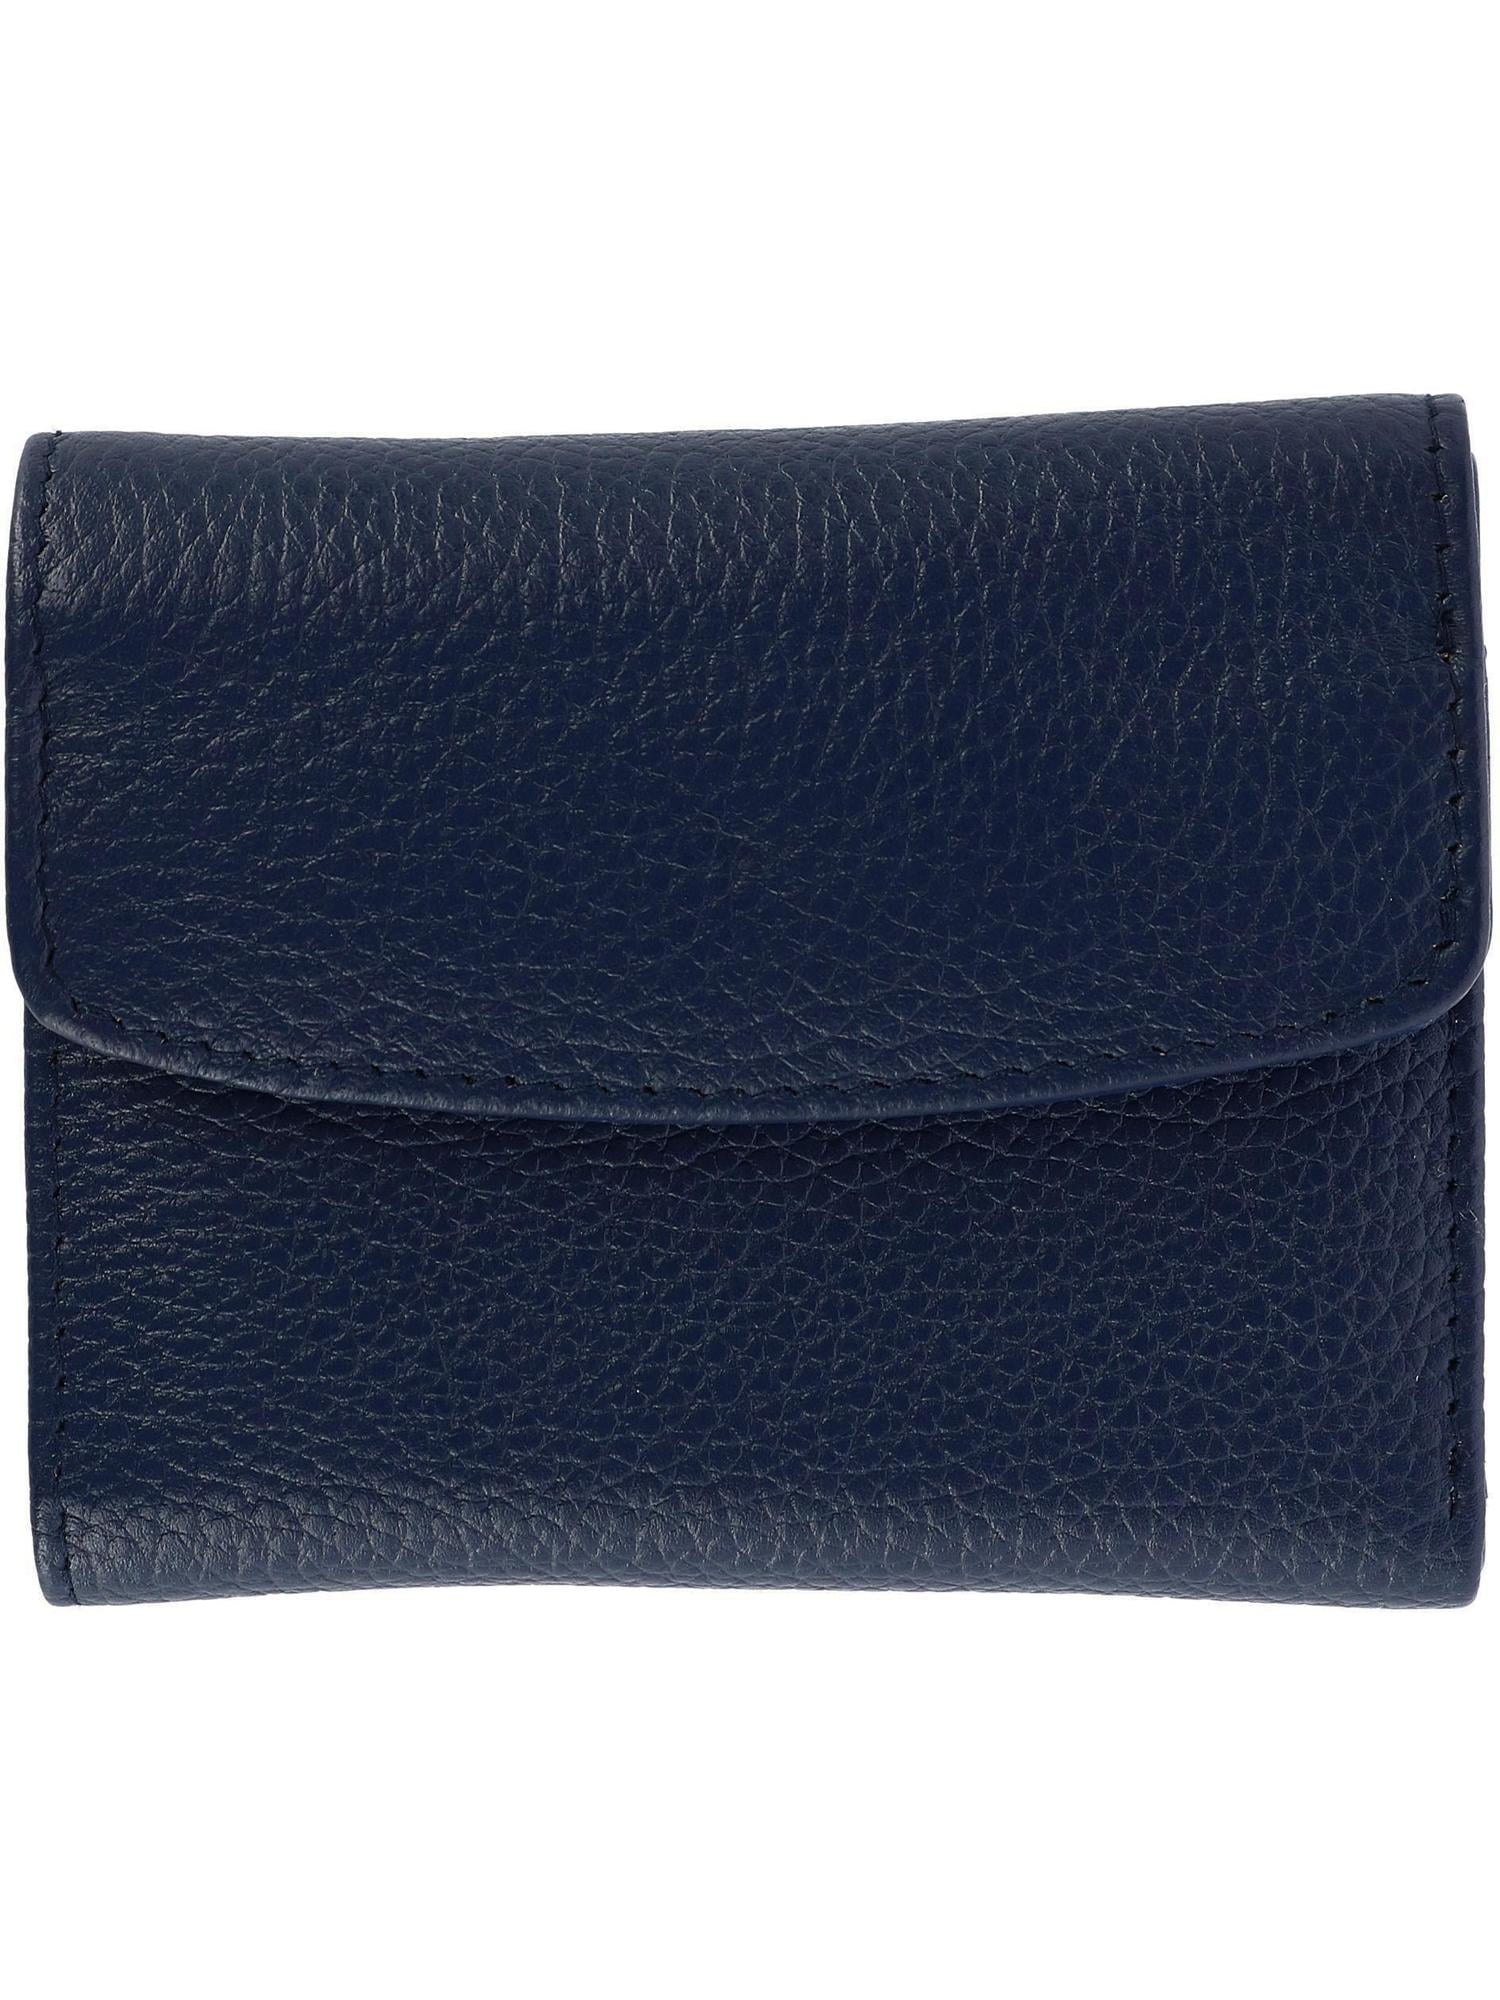 Buxton Leather Mini Tri-Fold Wallet (Women's) - Walmart.com